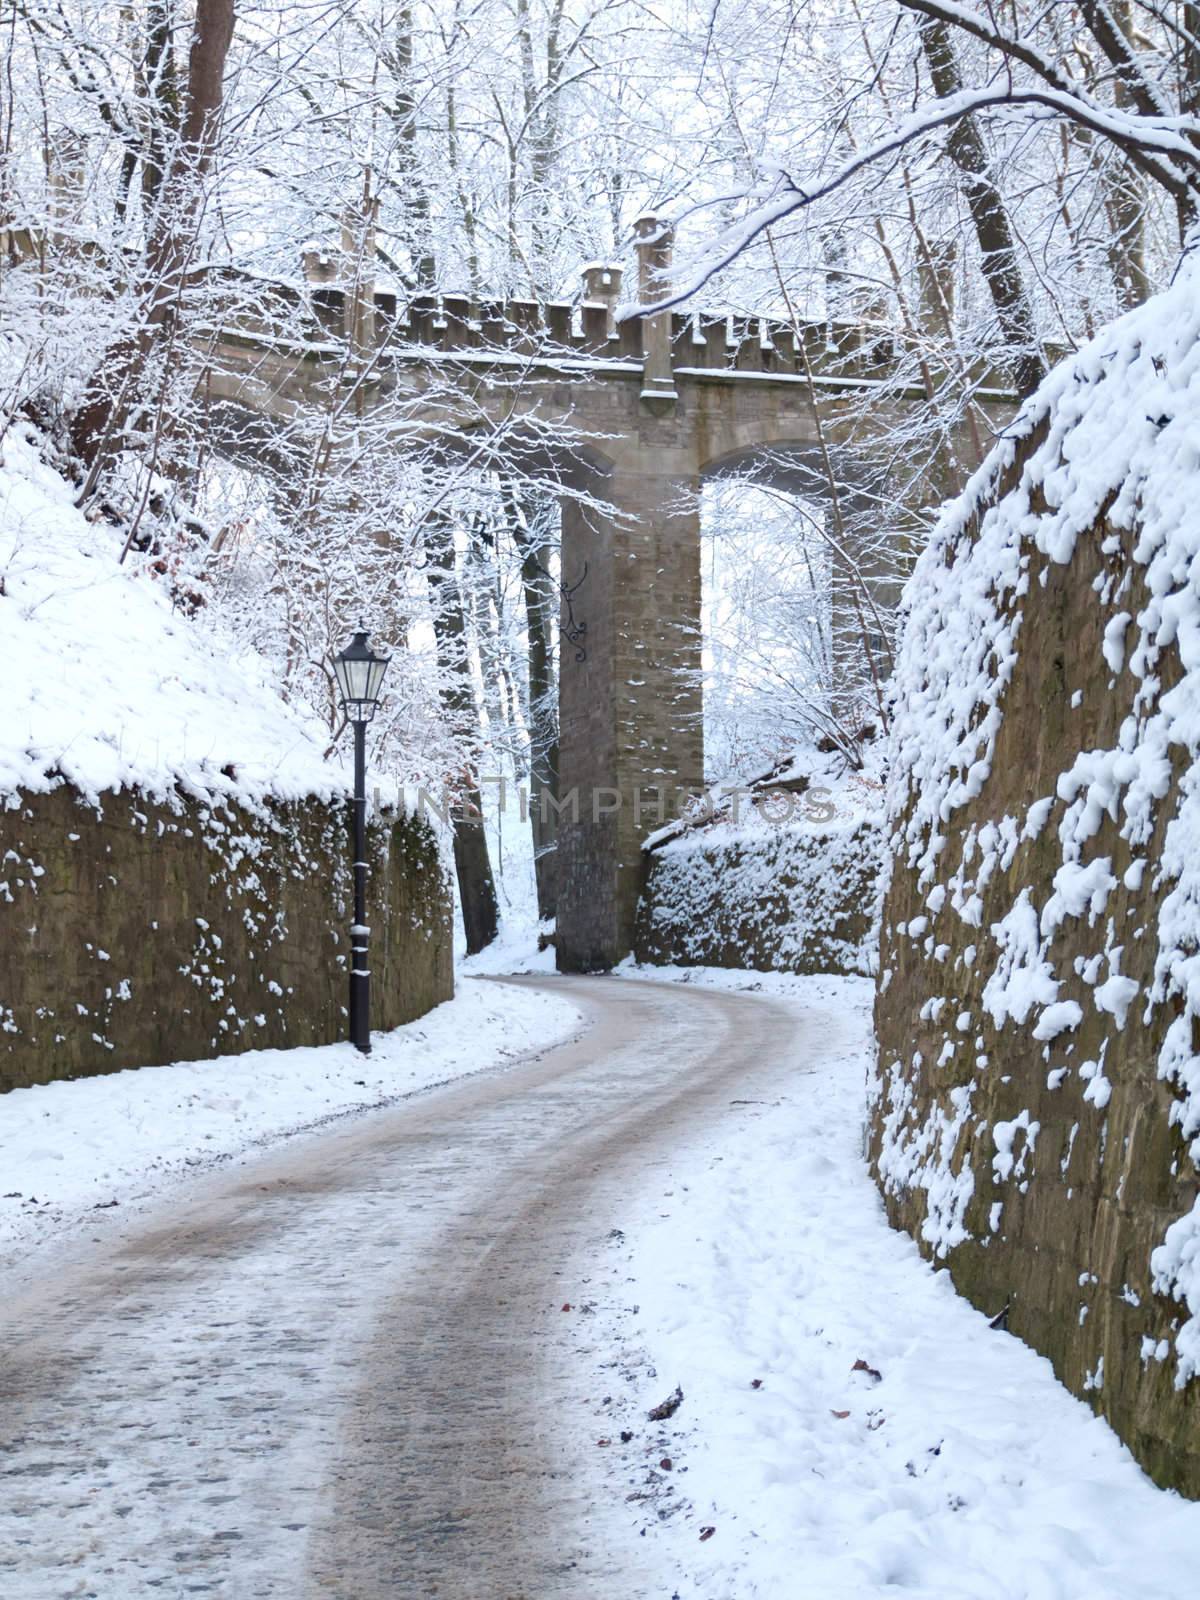 image of snowy Bridle Path by motorolka